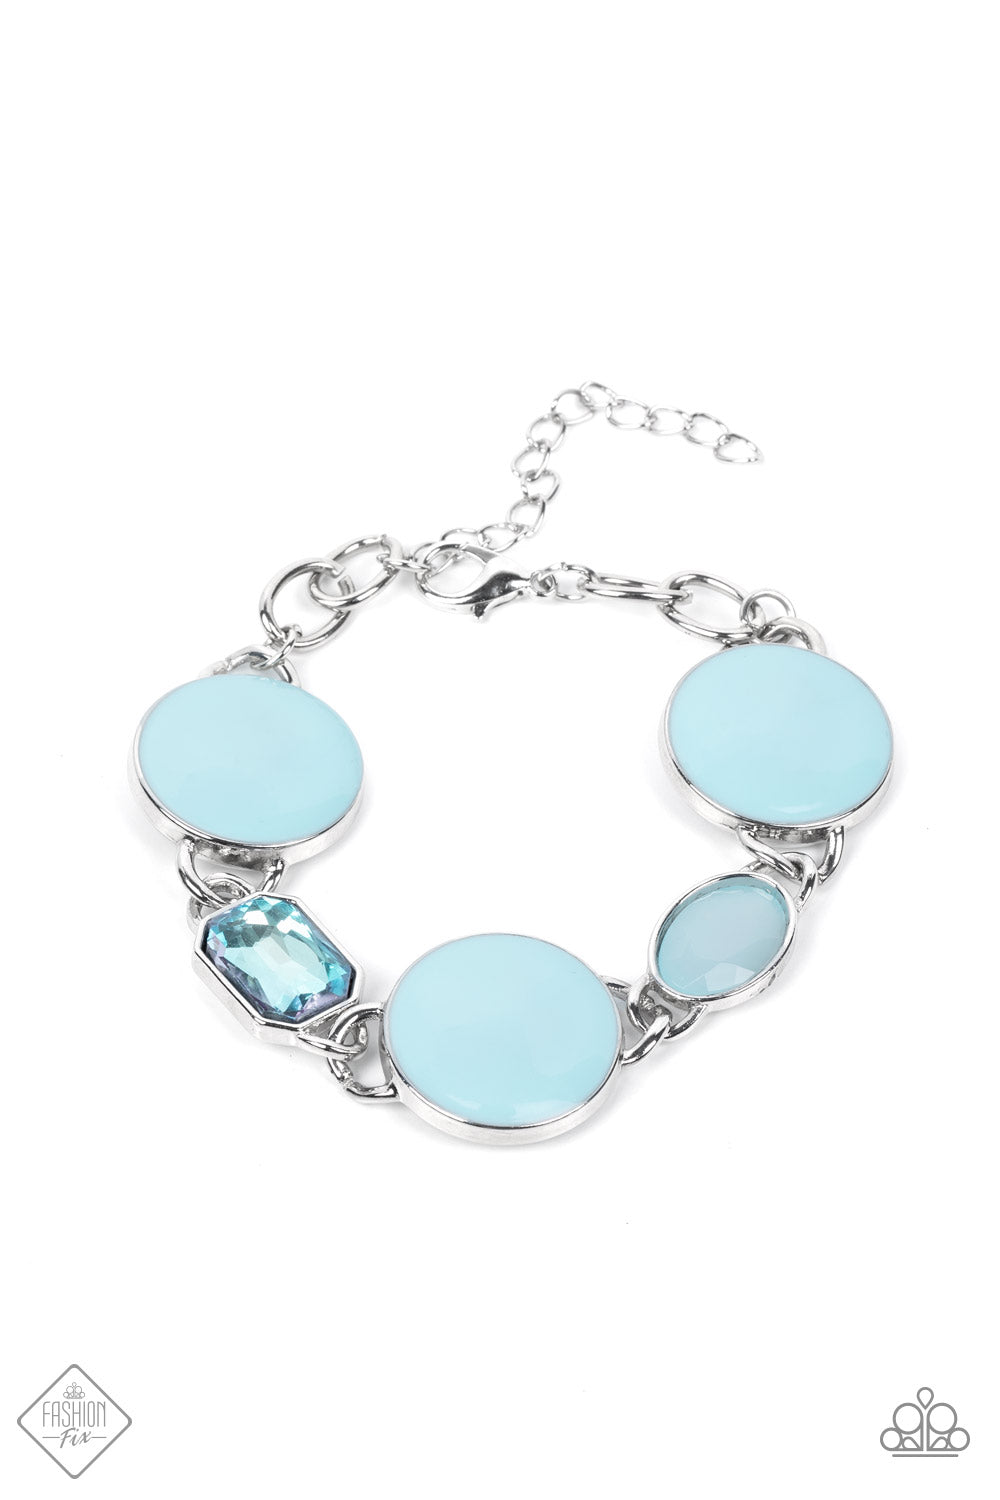 Paparazzi Dreamscape Dazzle - Blue Bracelet - Fashion Fix - A Finishing Touch Jewelry